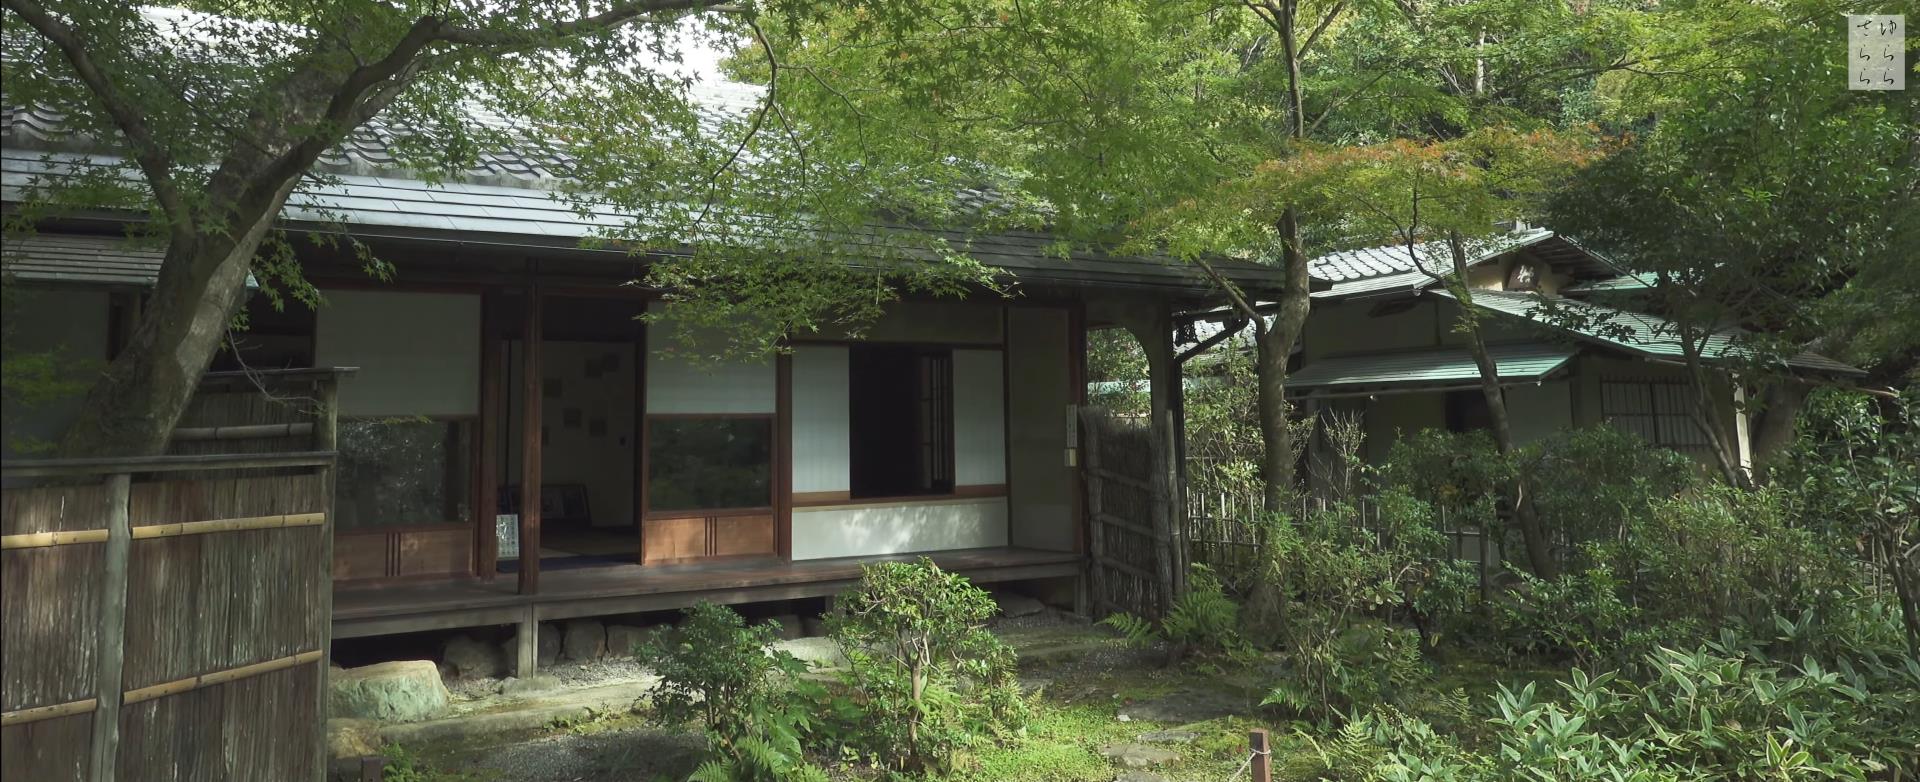 Wabi-Sabi-侘寂庭院,侘寂庭院,京都,侘寂设计,来迎院,RAIGO-IN,侘寂视频下载,日式侘寂庭院